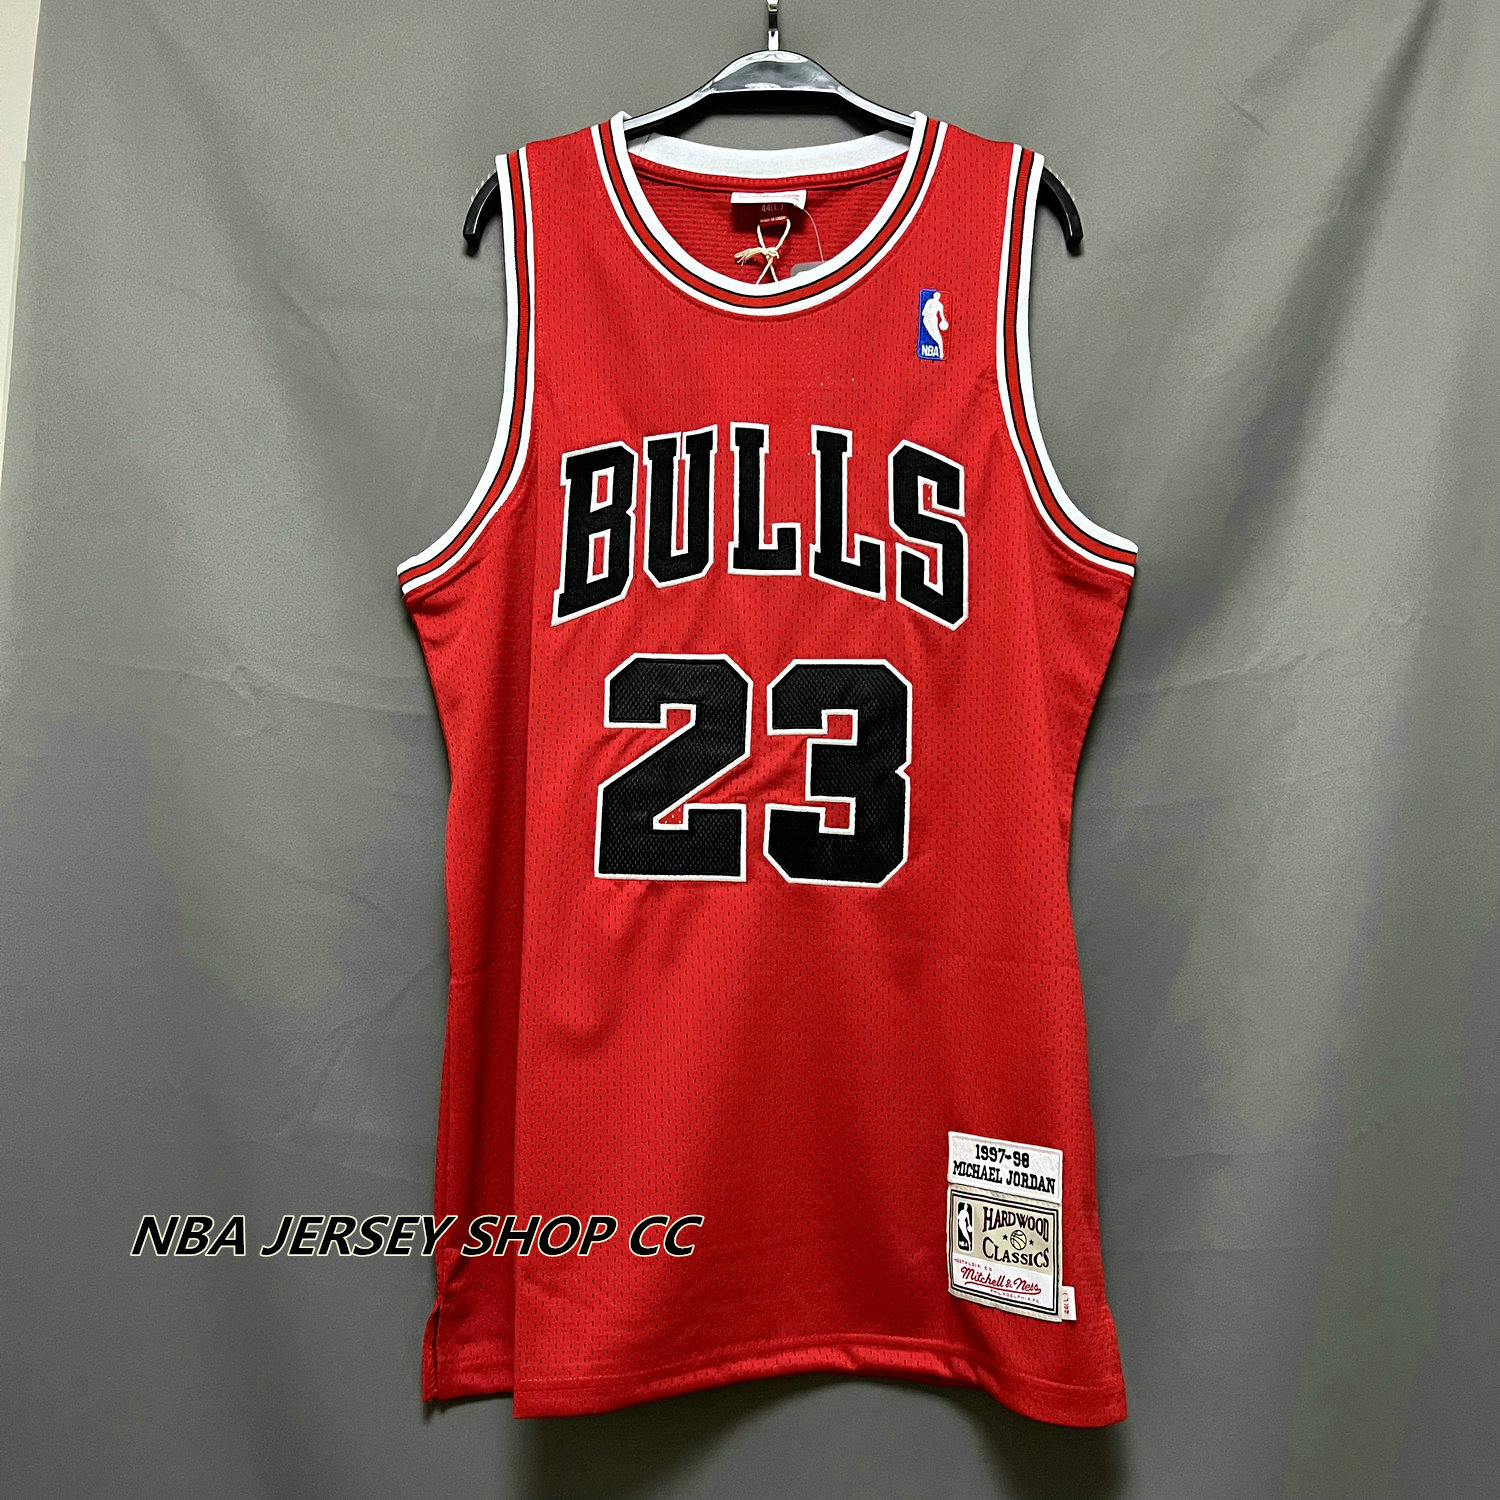 Mitchell & Ness Men's 1997 Chicago Bulls Michael Jordan #23 Red